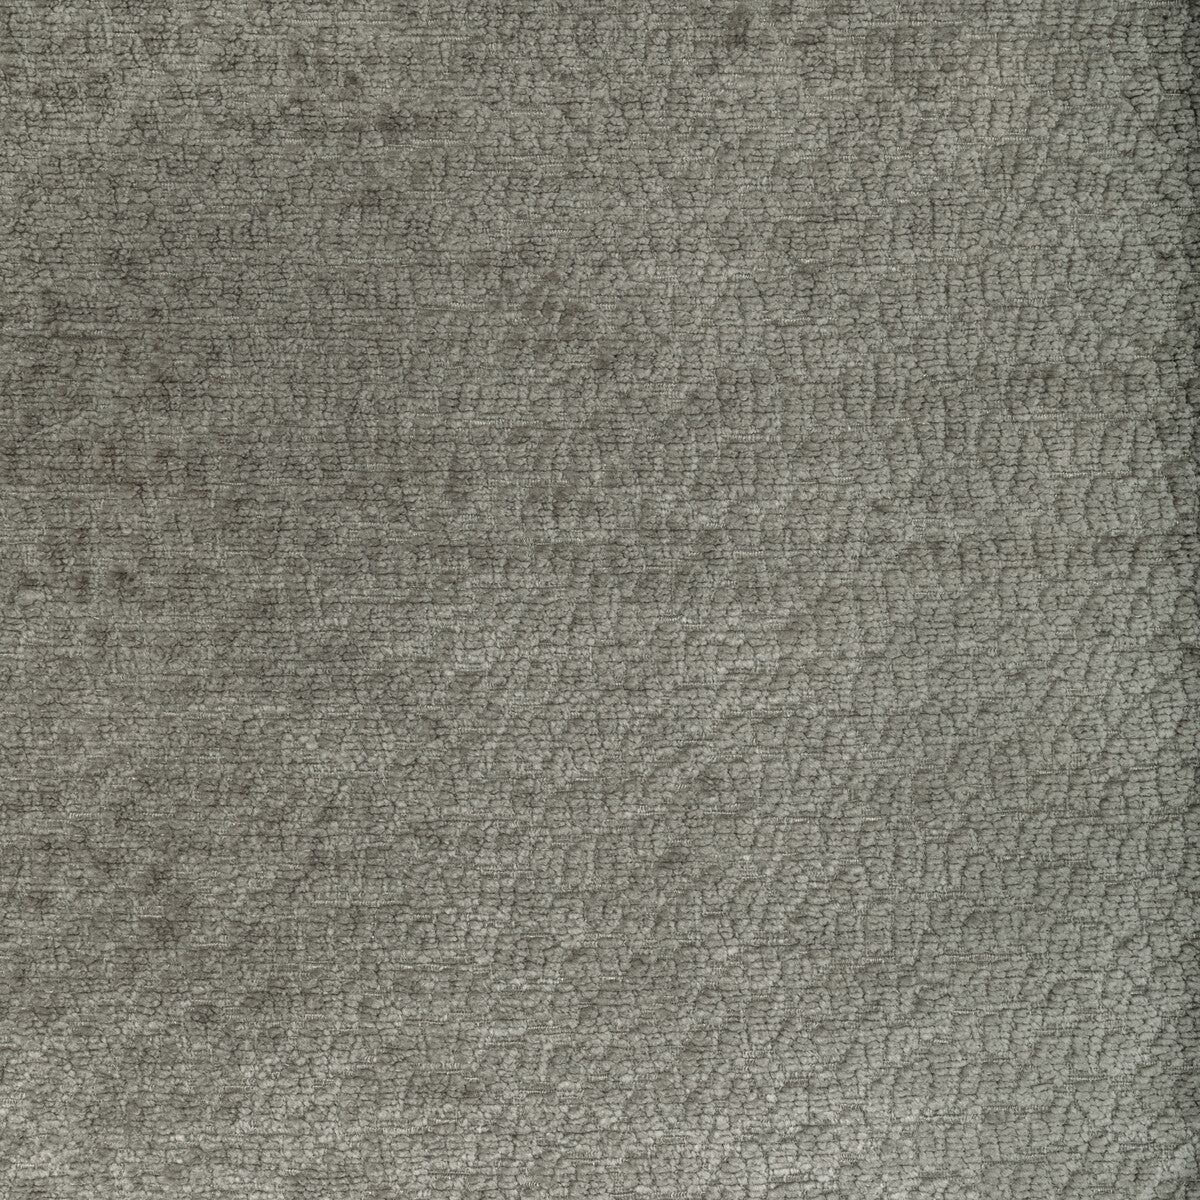 Kravet Smart fabric in 36606-11 color - pattern 36606.11.0 - by Kravet Smart in the Performance Kravetarmor collection